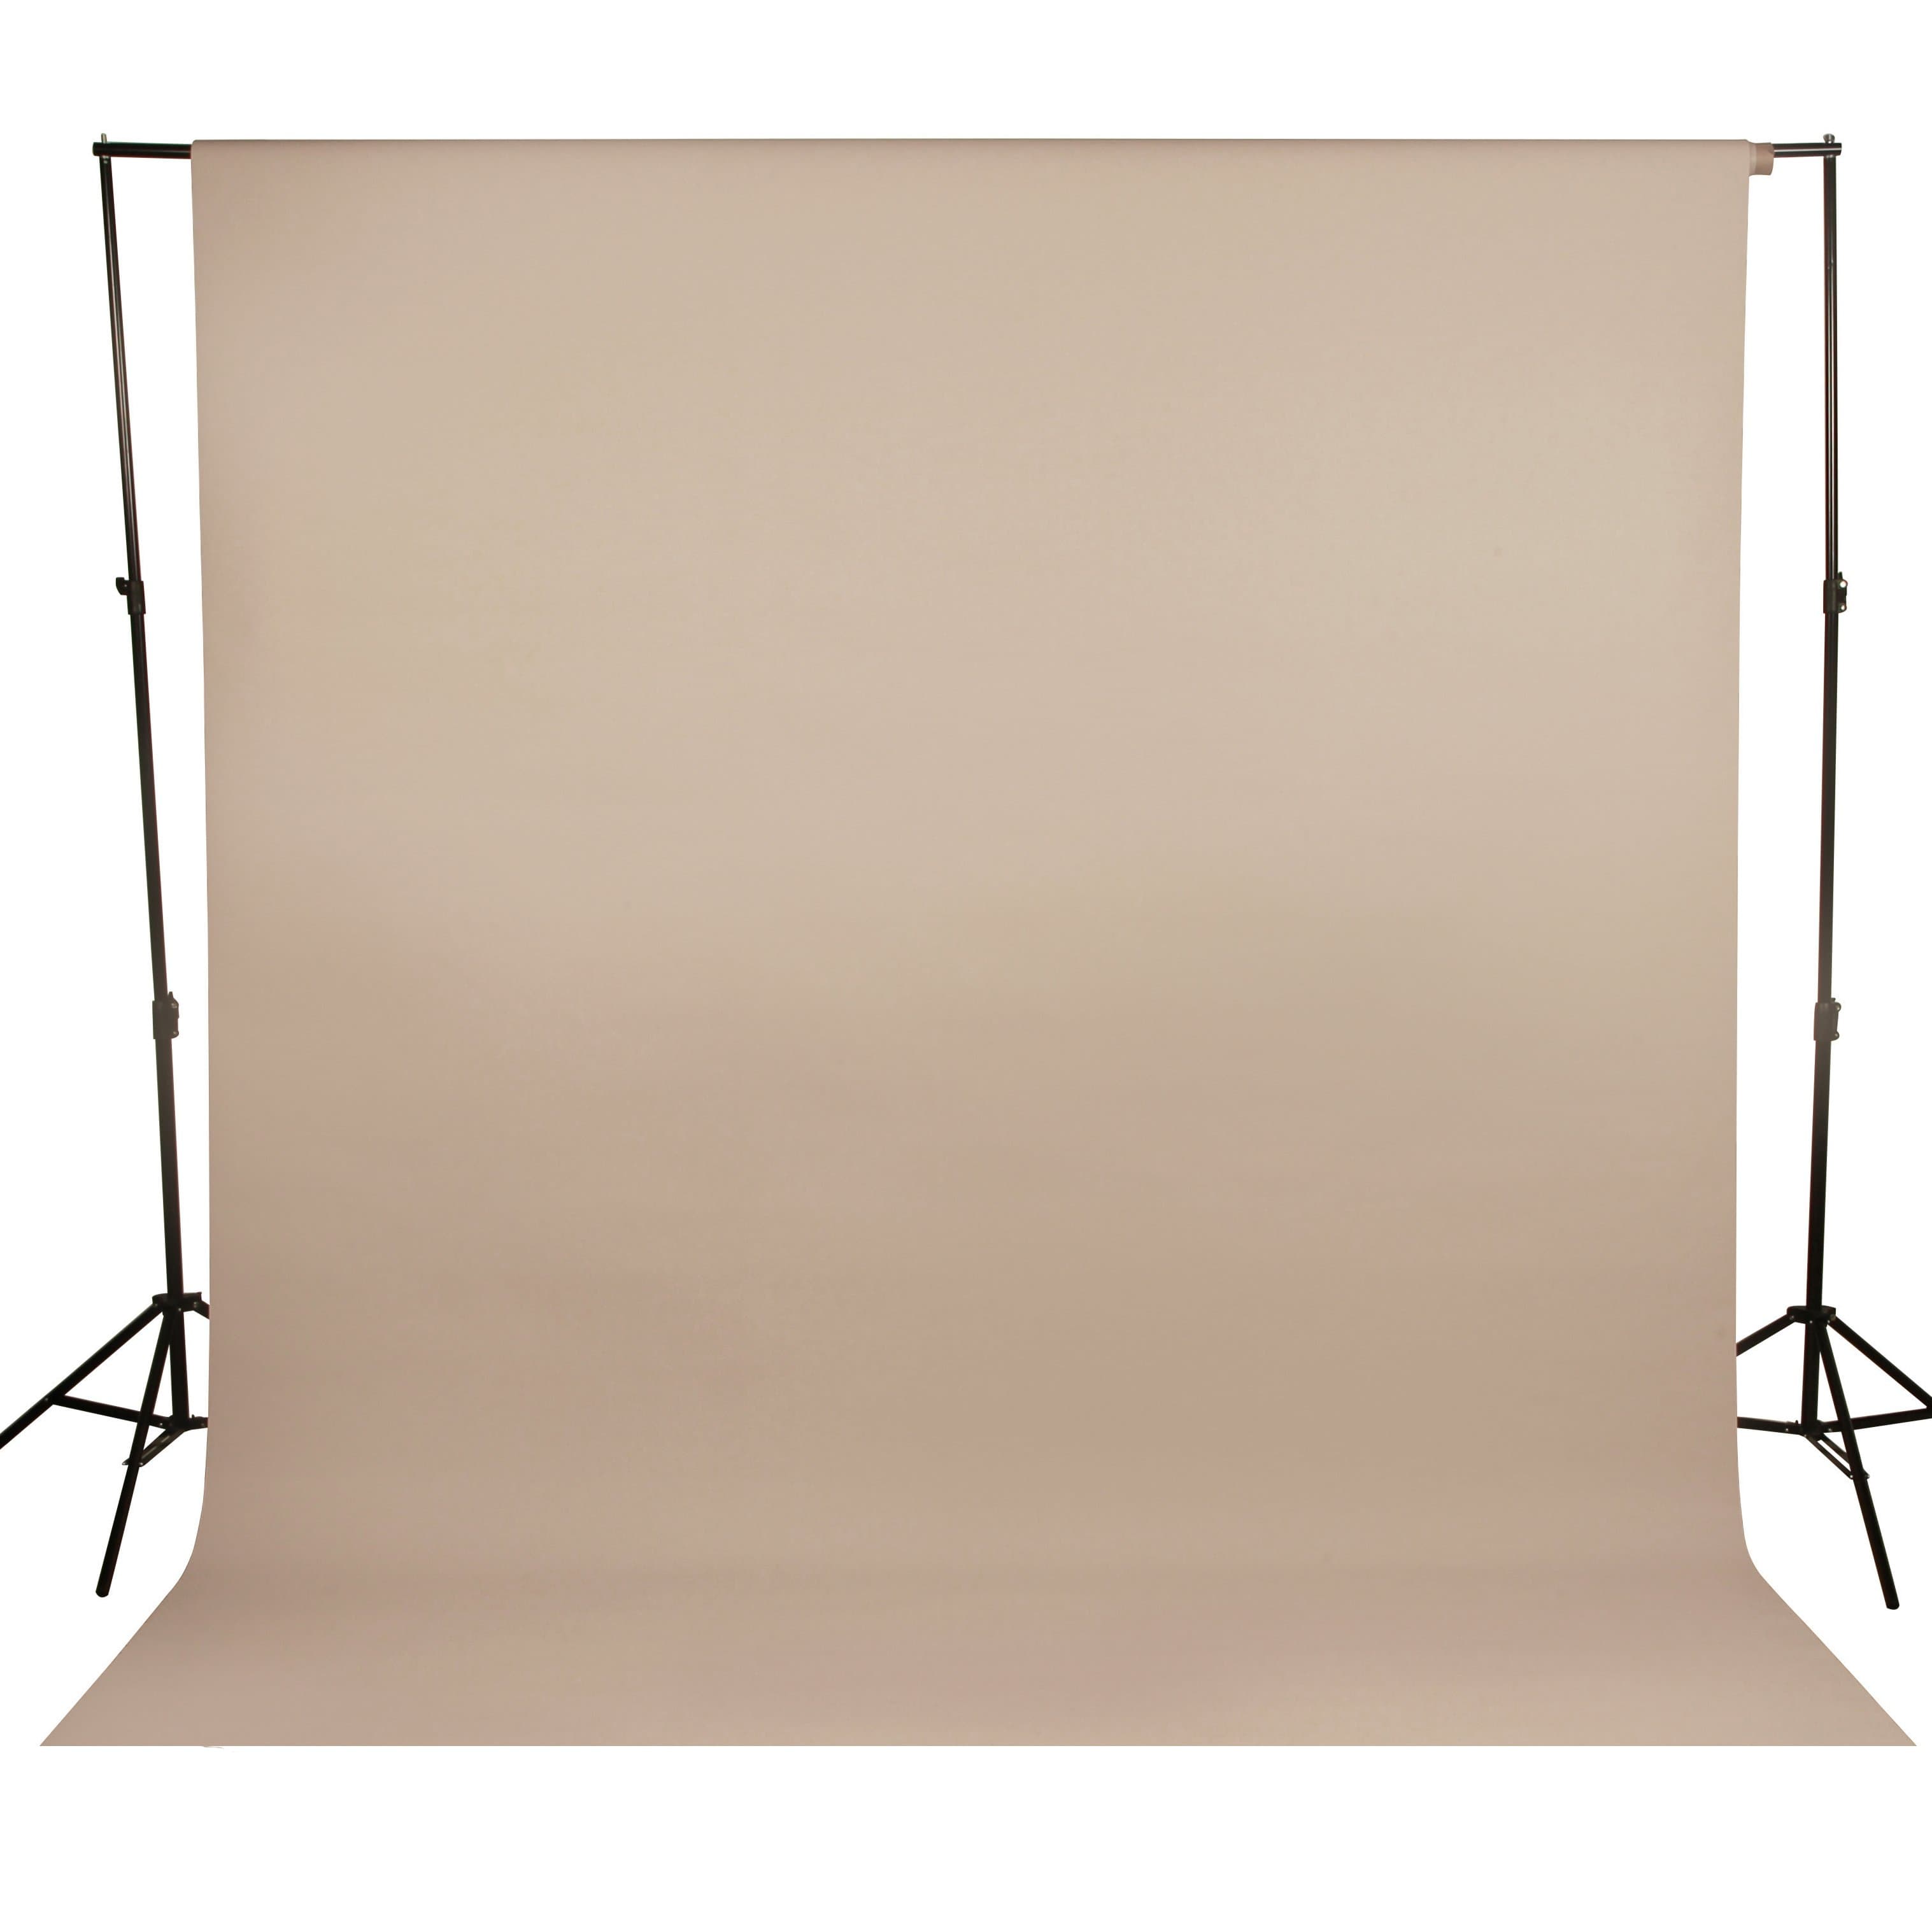 Paper Roll Photography Studio Backdrop Full Length (2.7 x 10M) - Creamy Truffle Beige